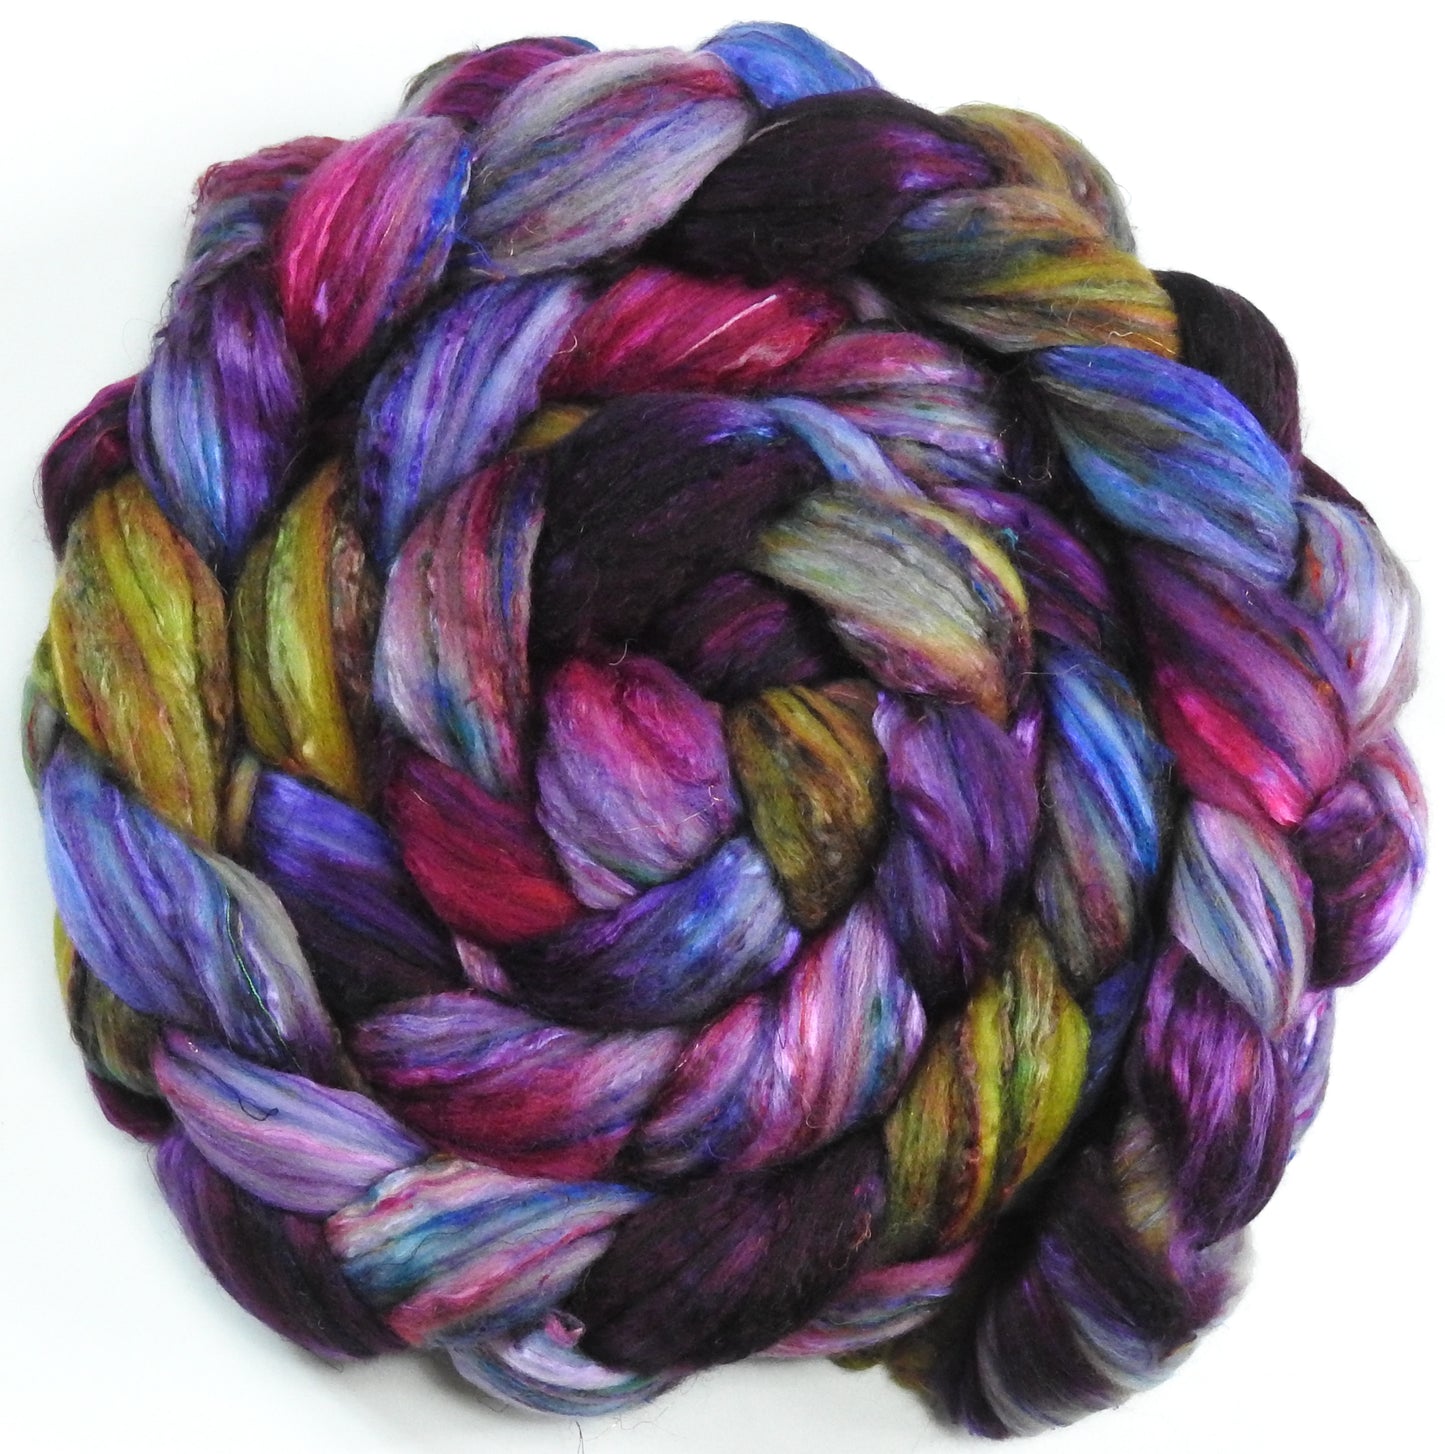 Parasol (5.8 oz) - Batt in a Braid #39 - Falkland Merino/ Mulberry Silk / Sari Silk (50/25/25)